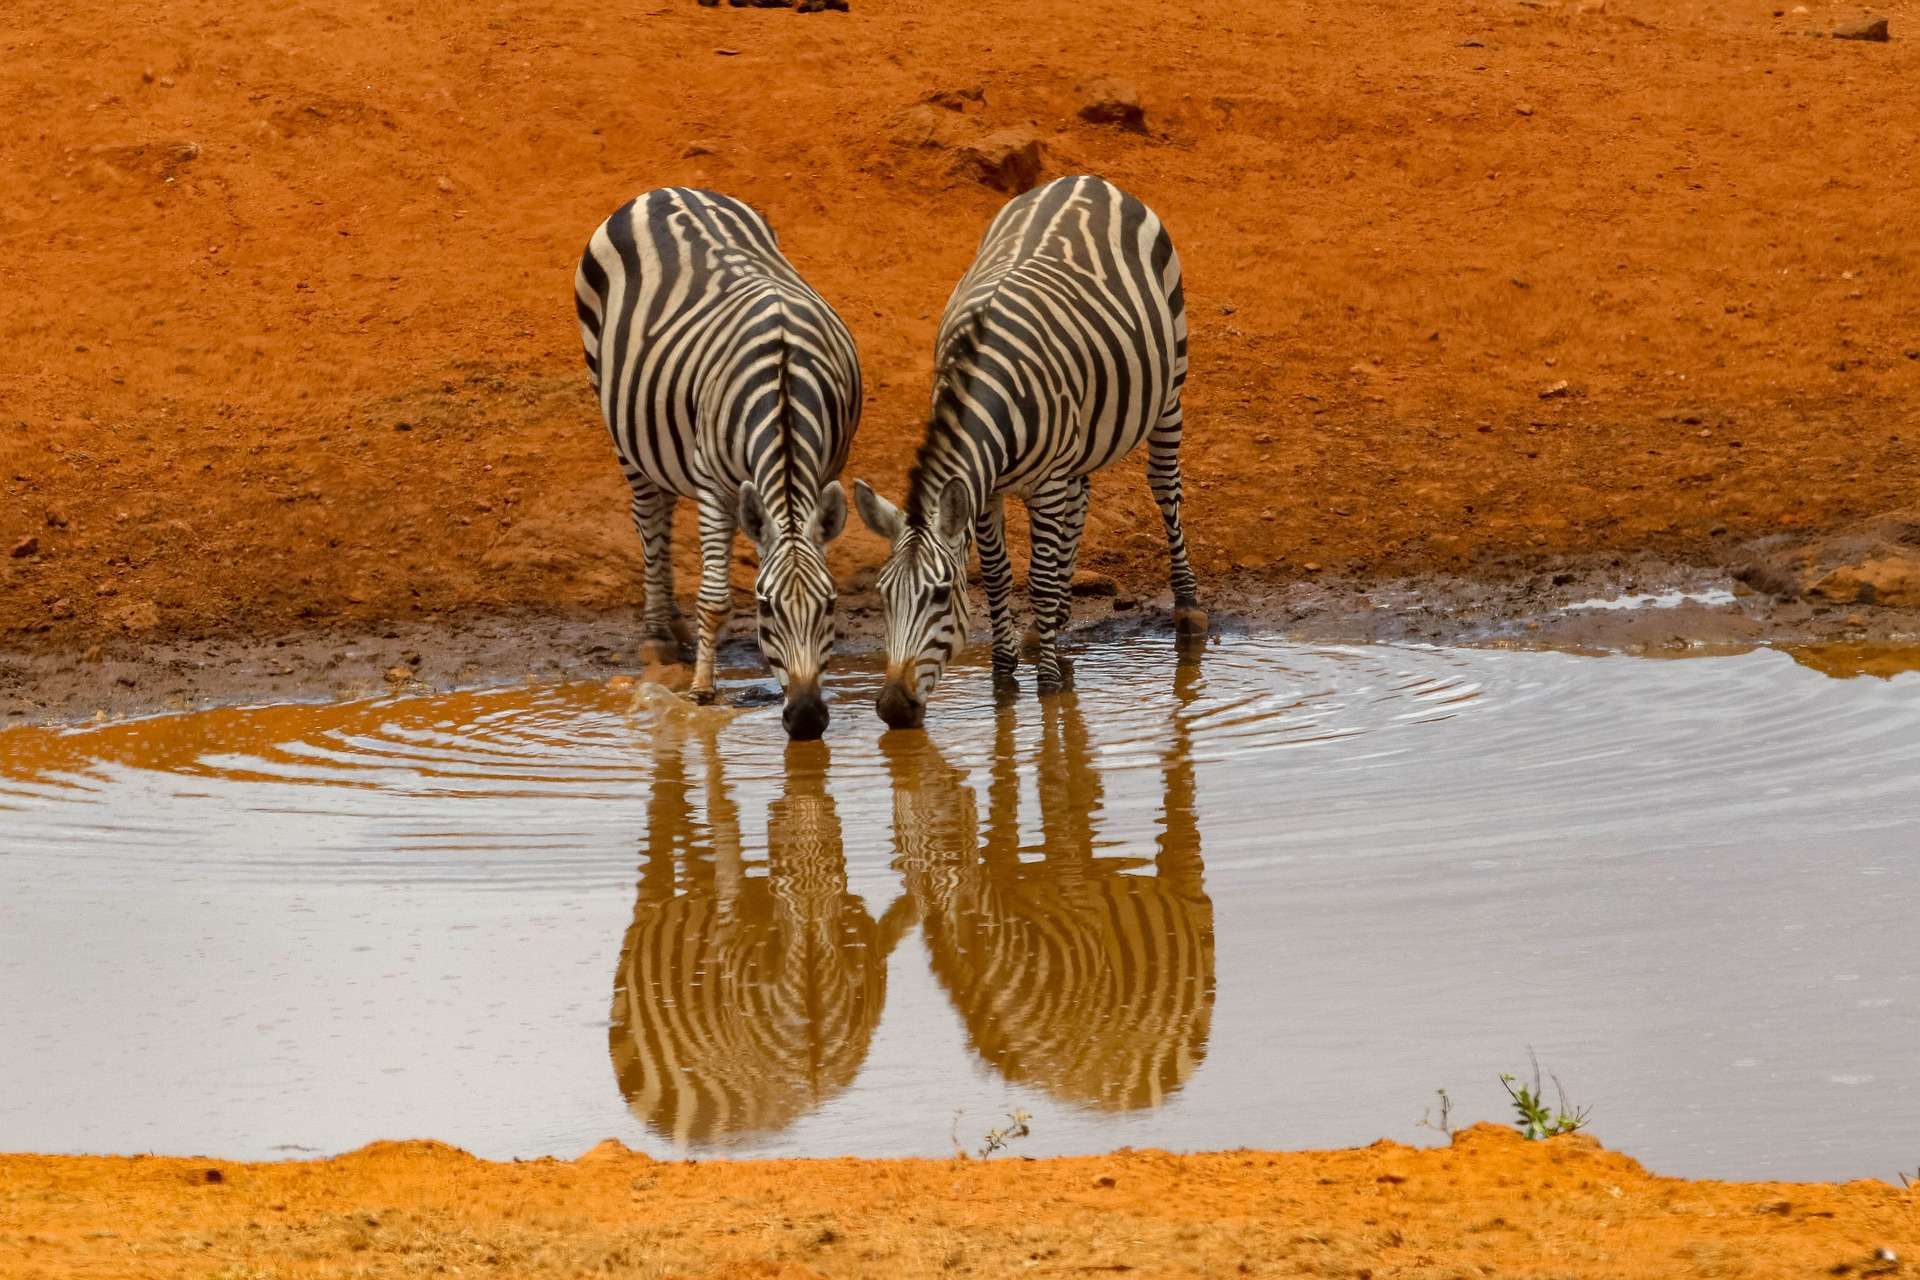 Zebra taking water at a river in Tsavo